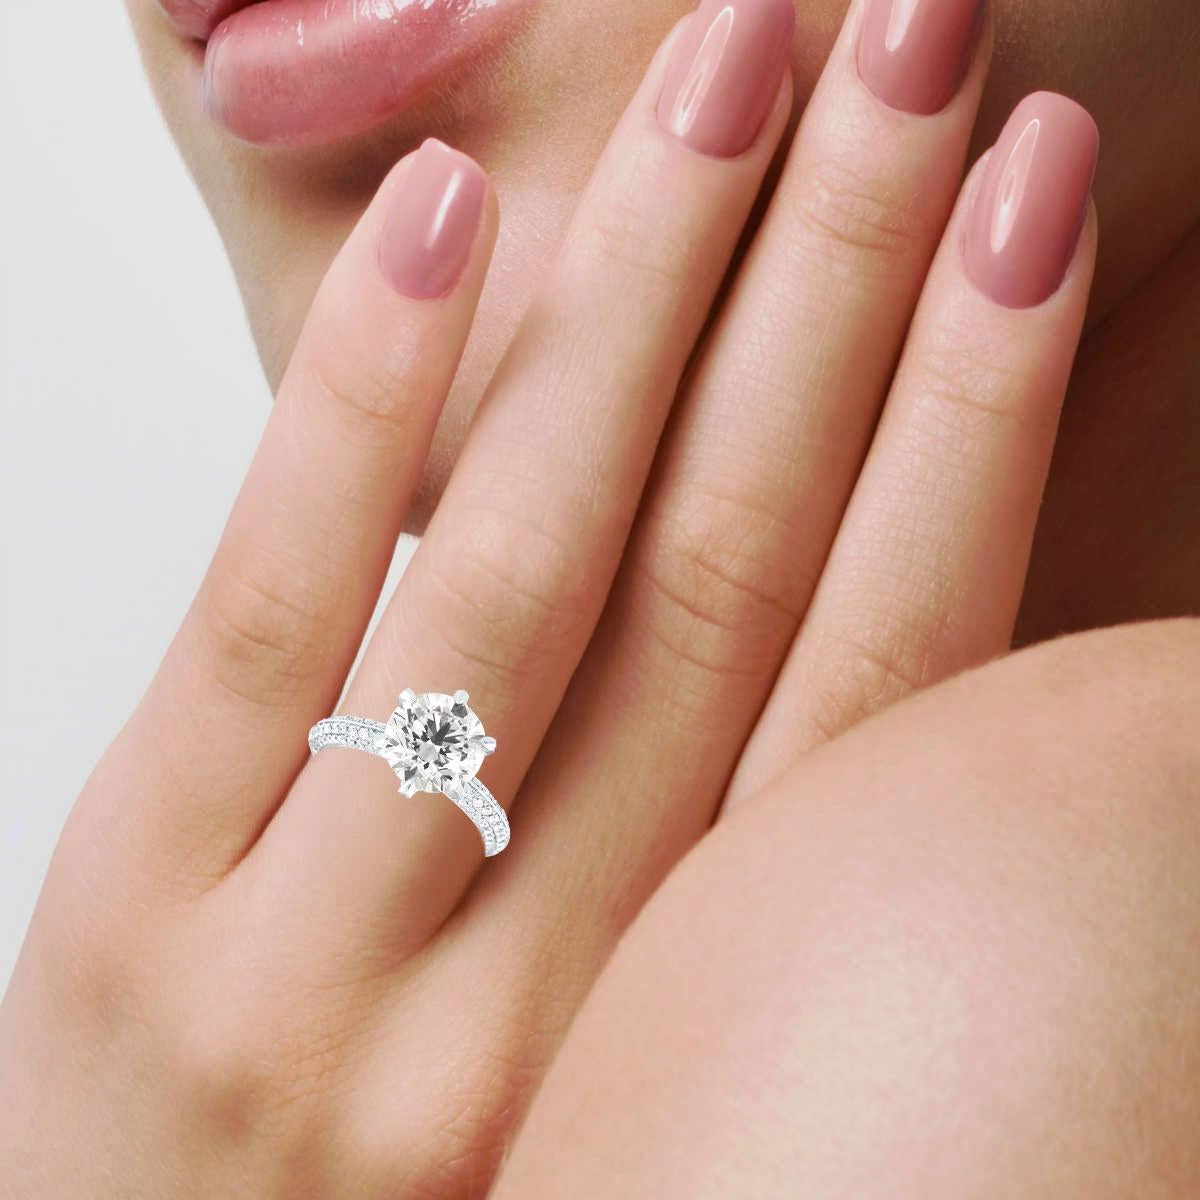 Women's GIA Certified 3.39 Carat Round D-VVS1 Ideal Cut Platinum Diamond Ring For Sale